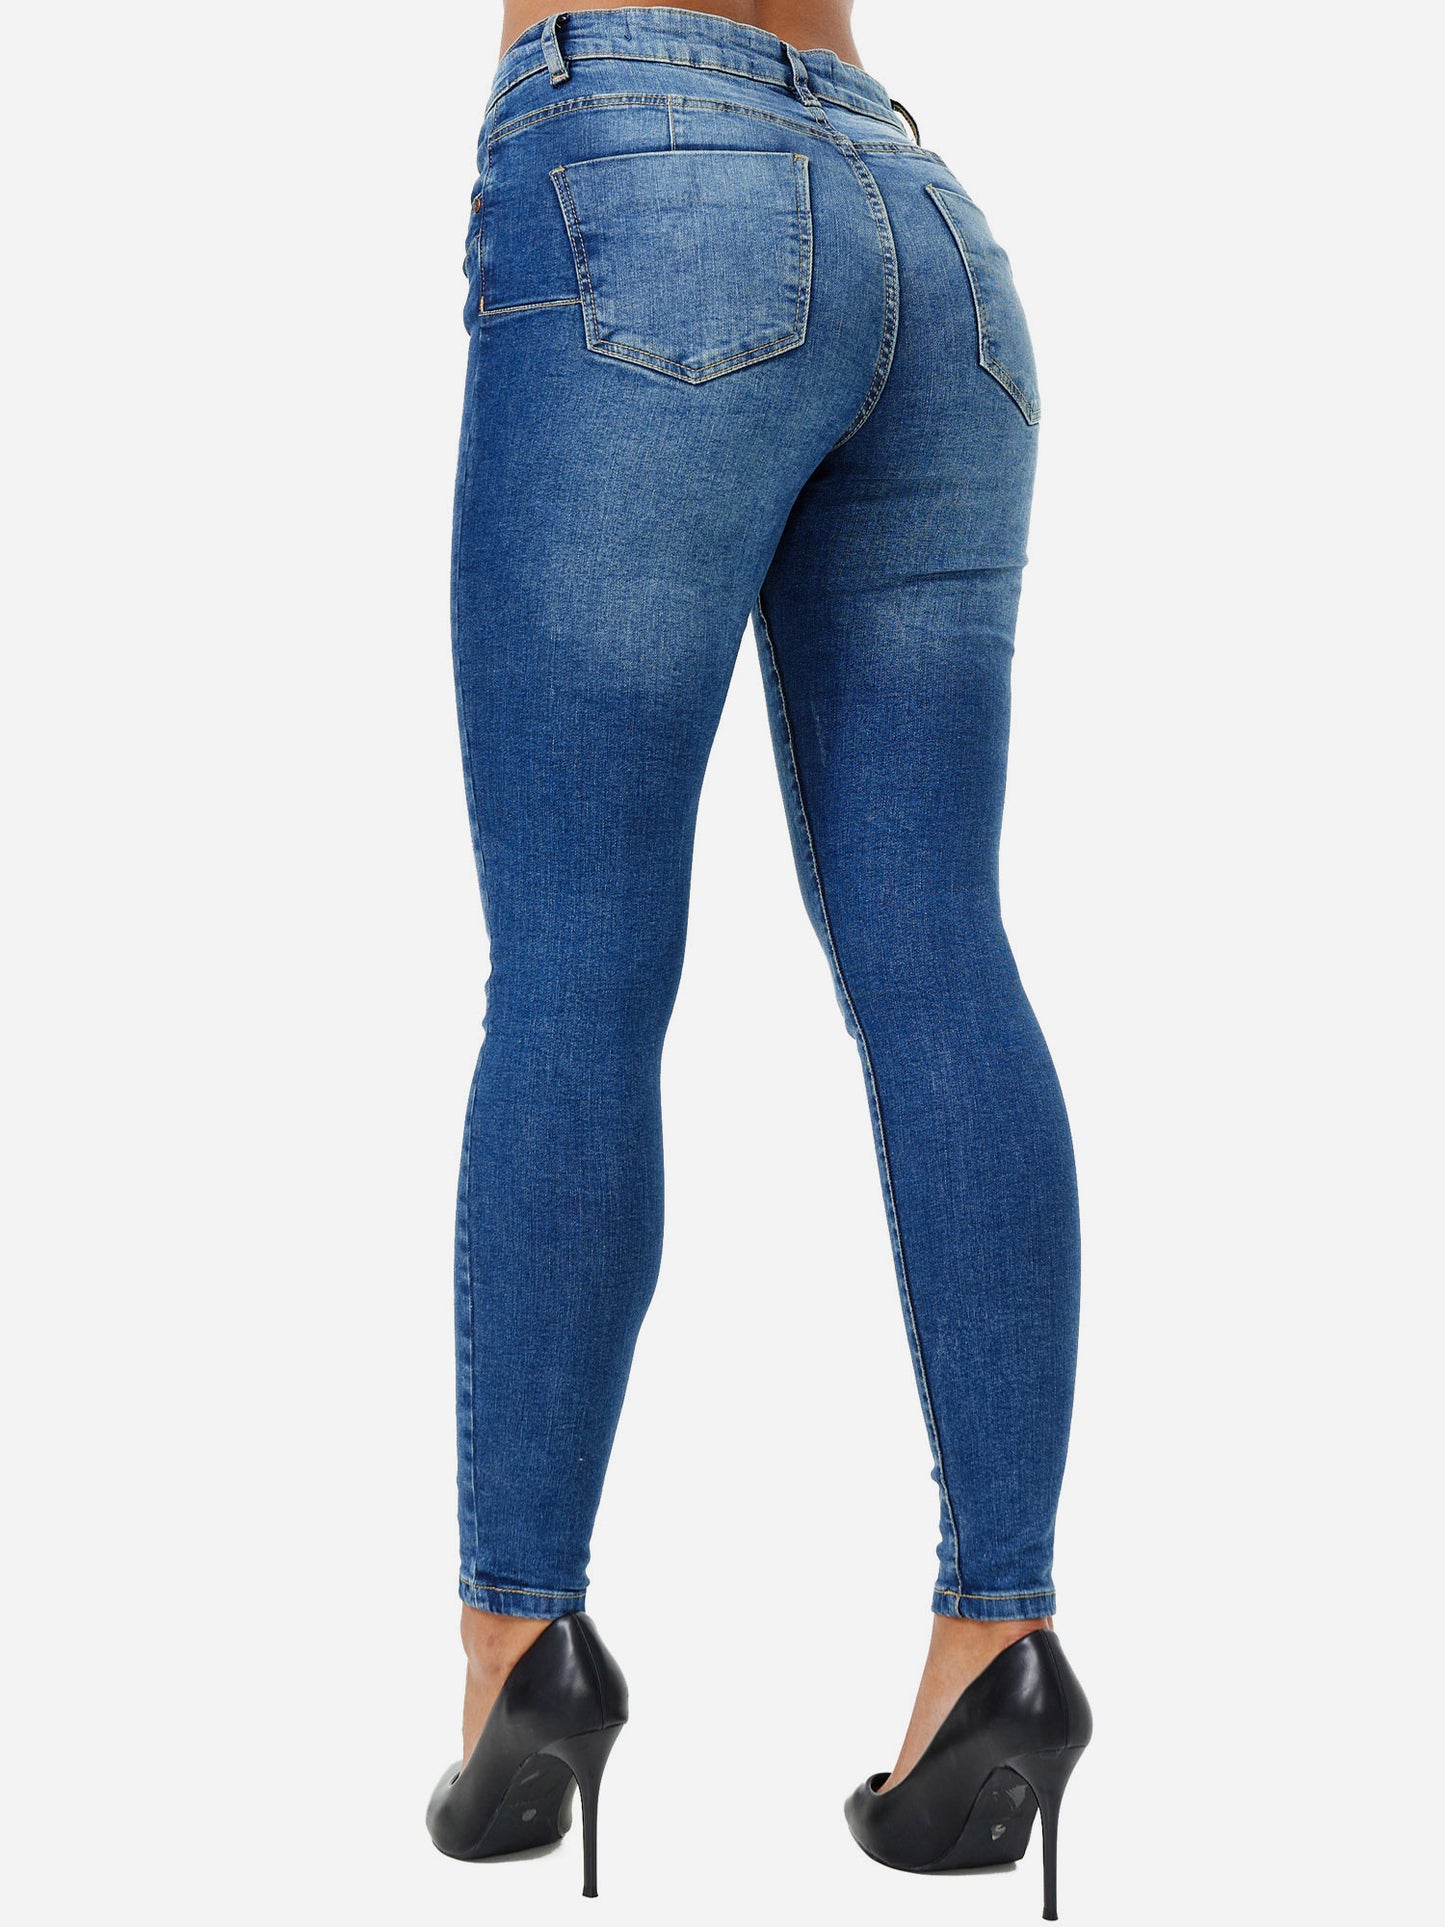 Tazzio Damen Skinny Fit Push Up Jeans F106